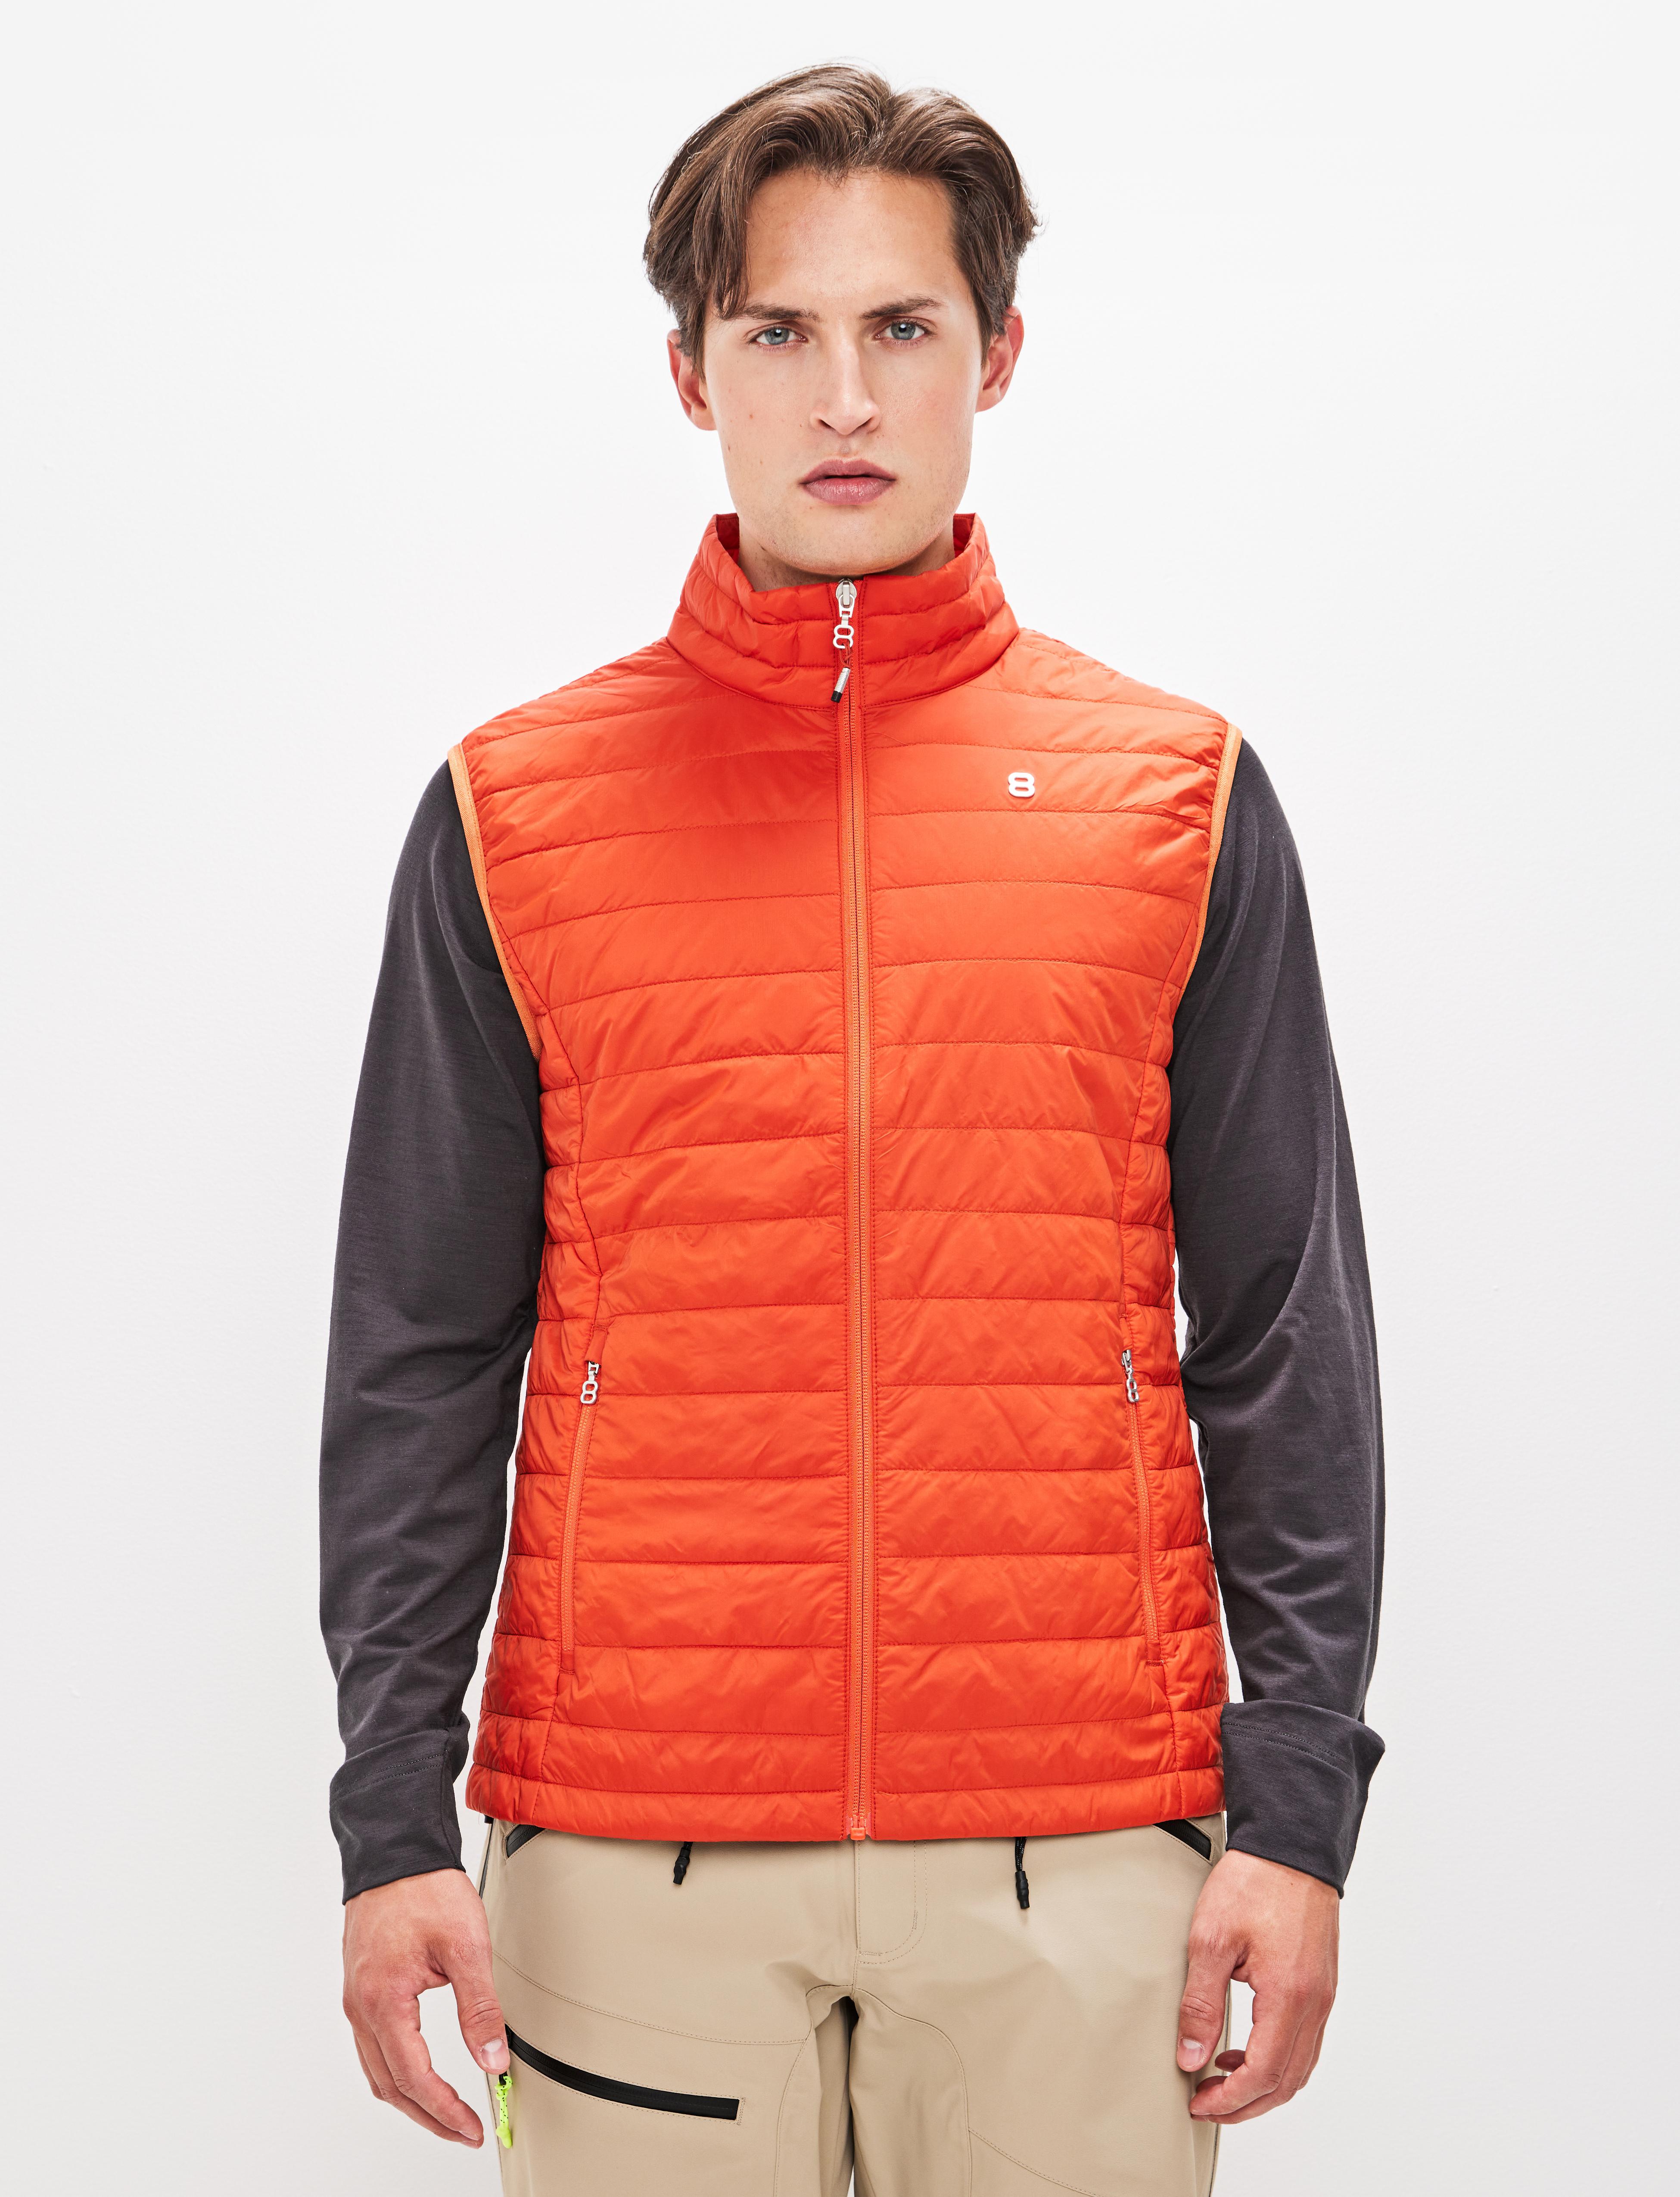 Nova Hybrid Vest Chili - Orange lightweight vest men